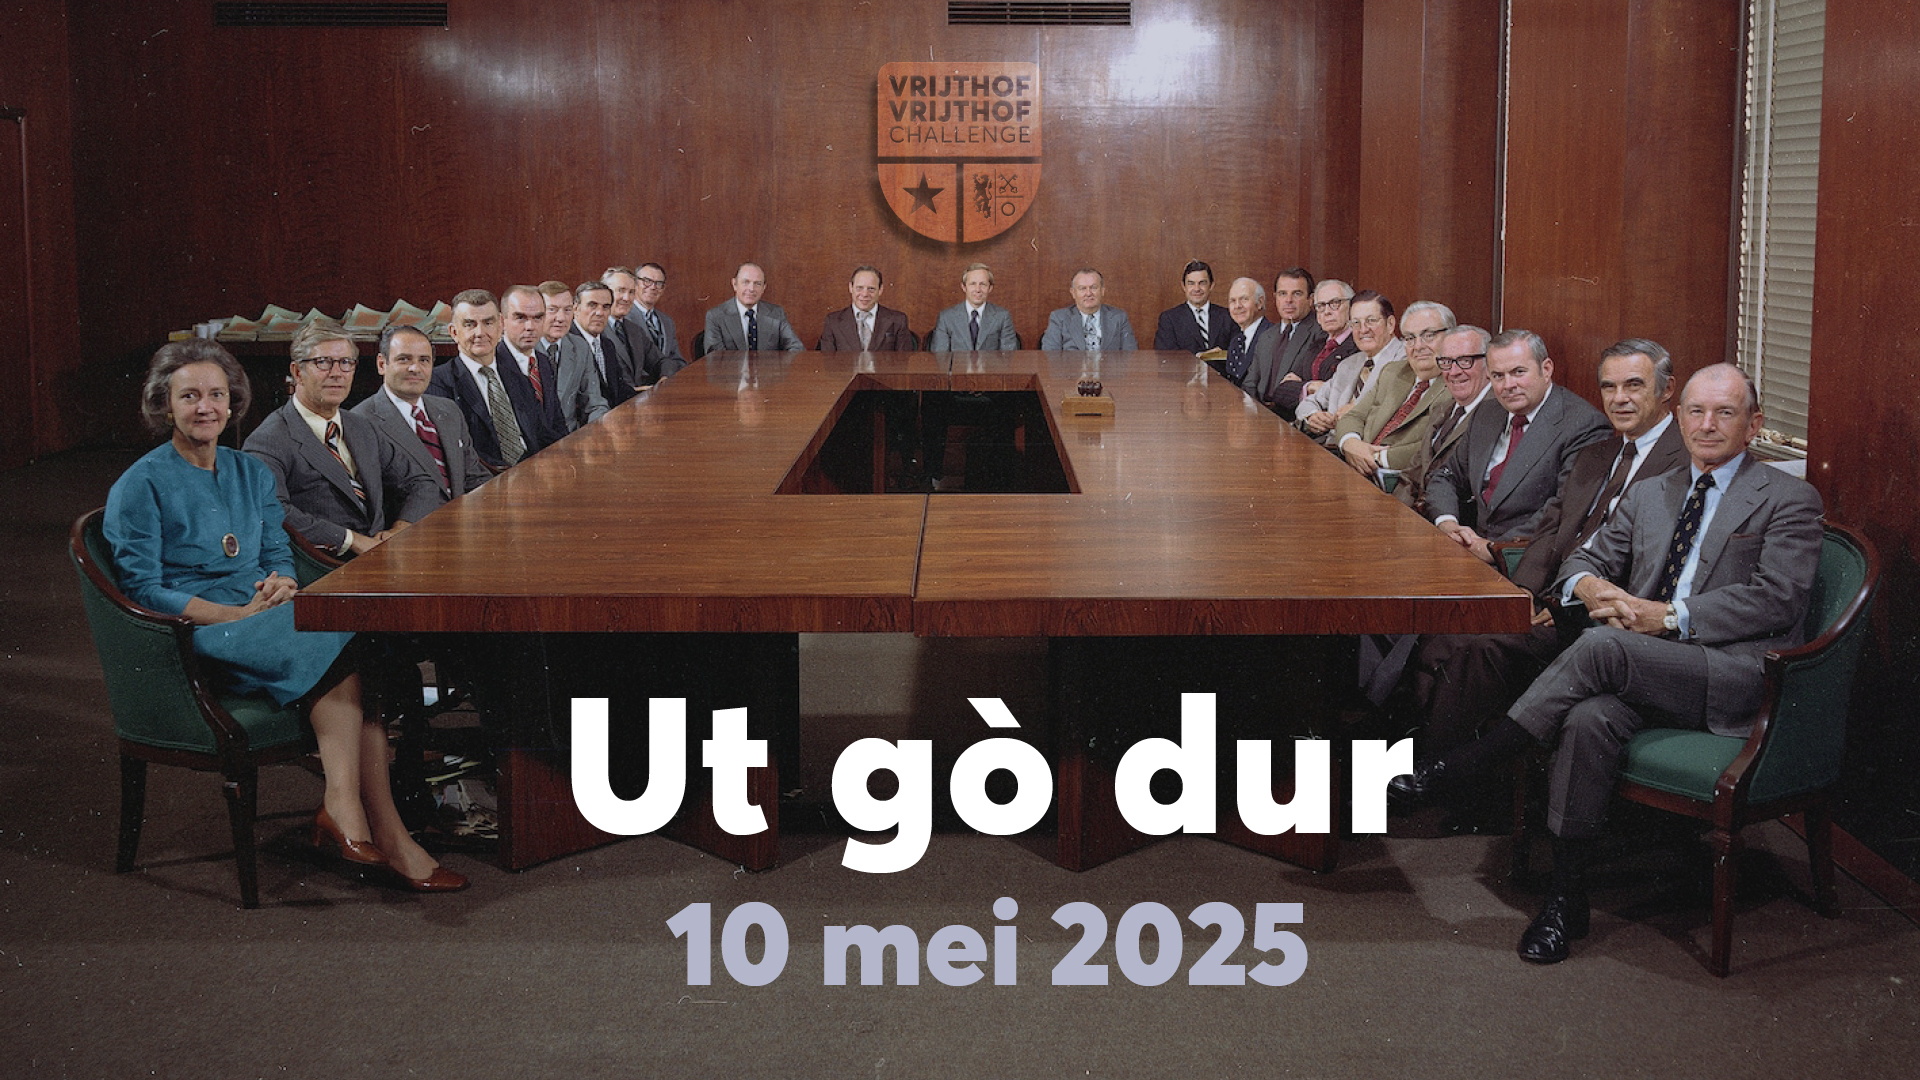 Date announcement of Vrijthof-Vrijthof Challenge 2025